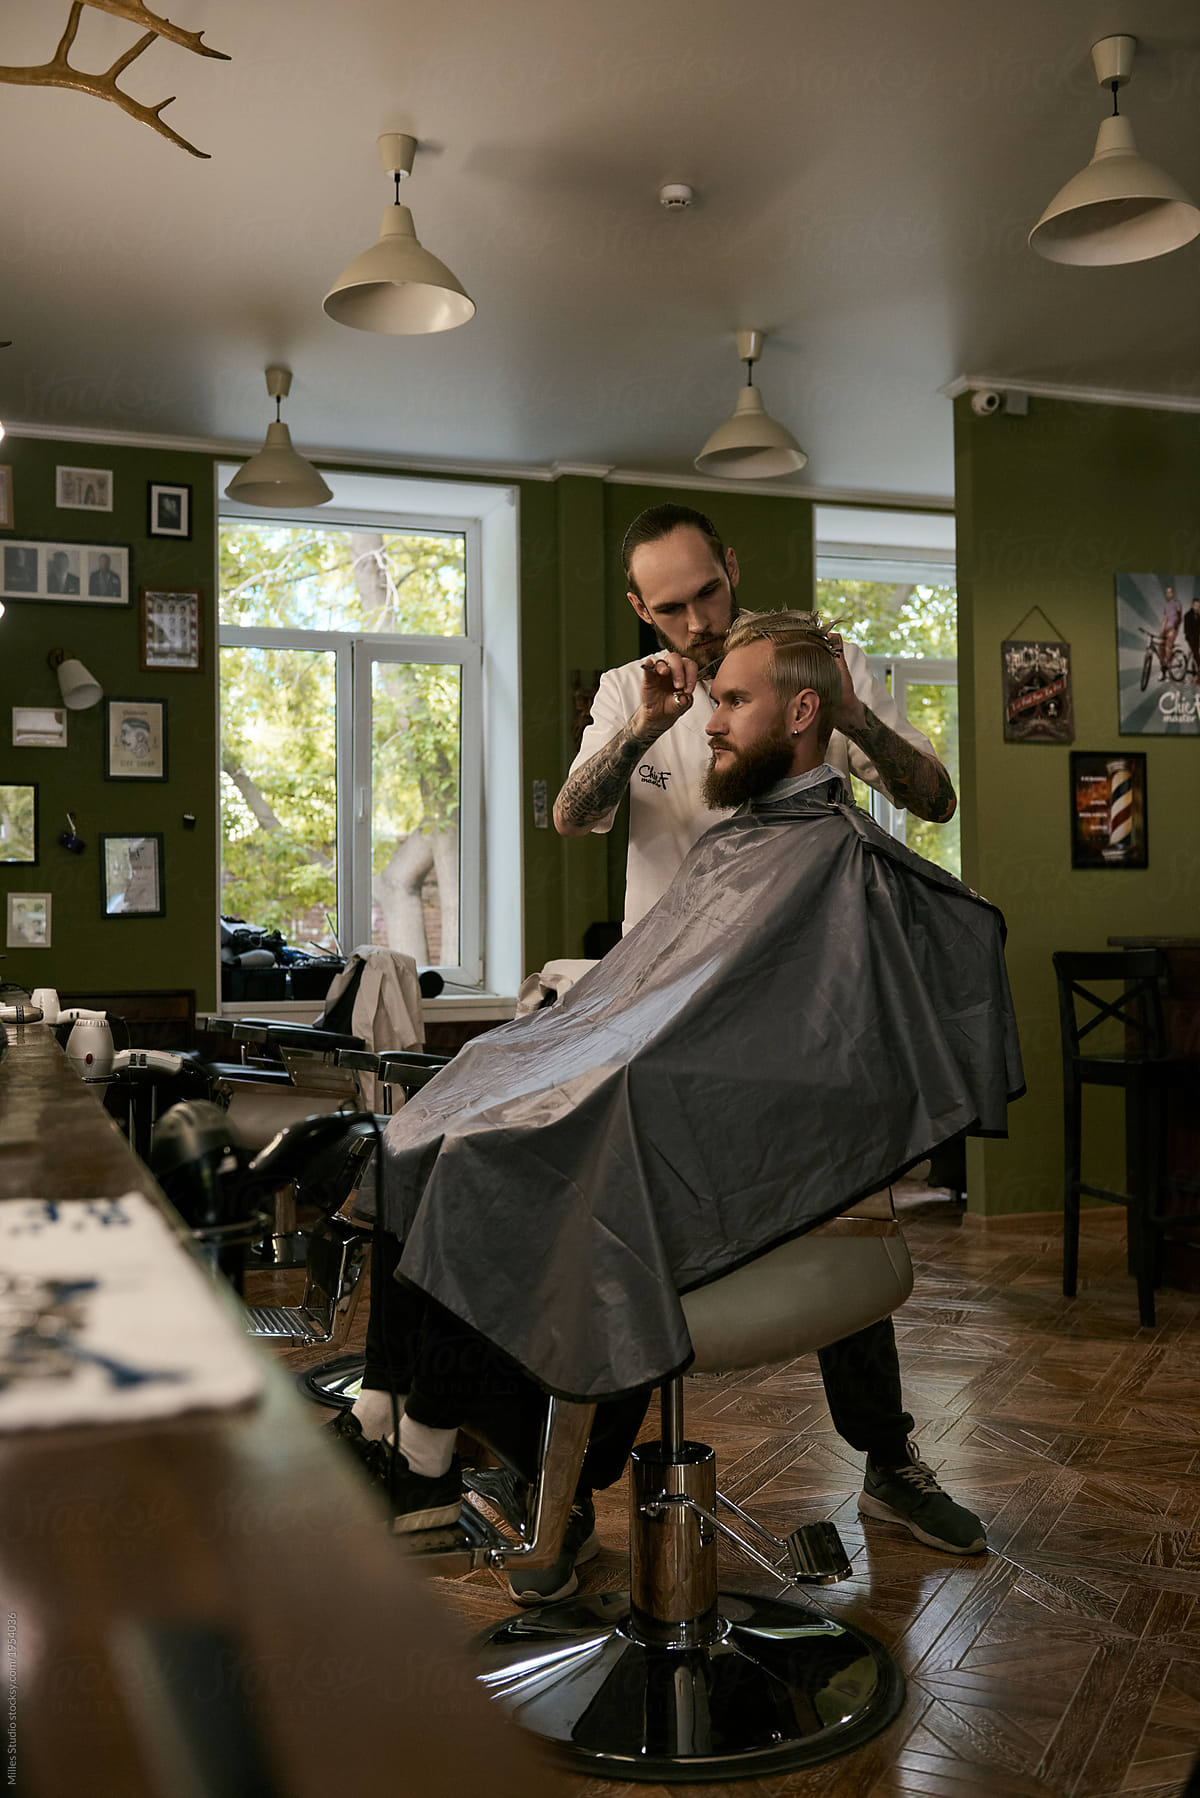 Man cutting hair of bearded client